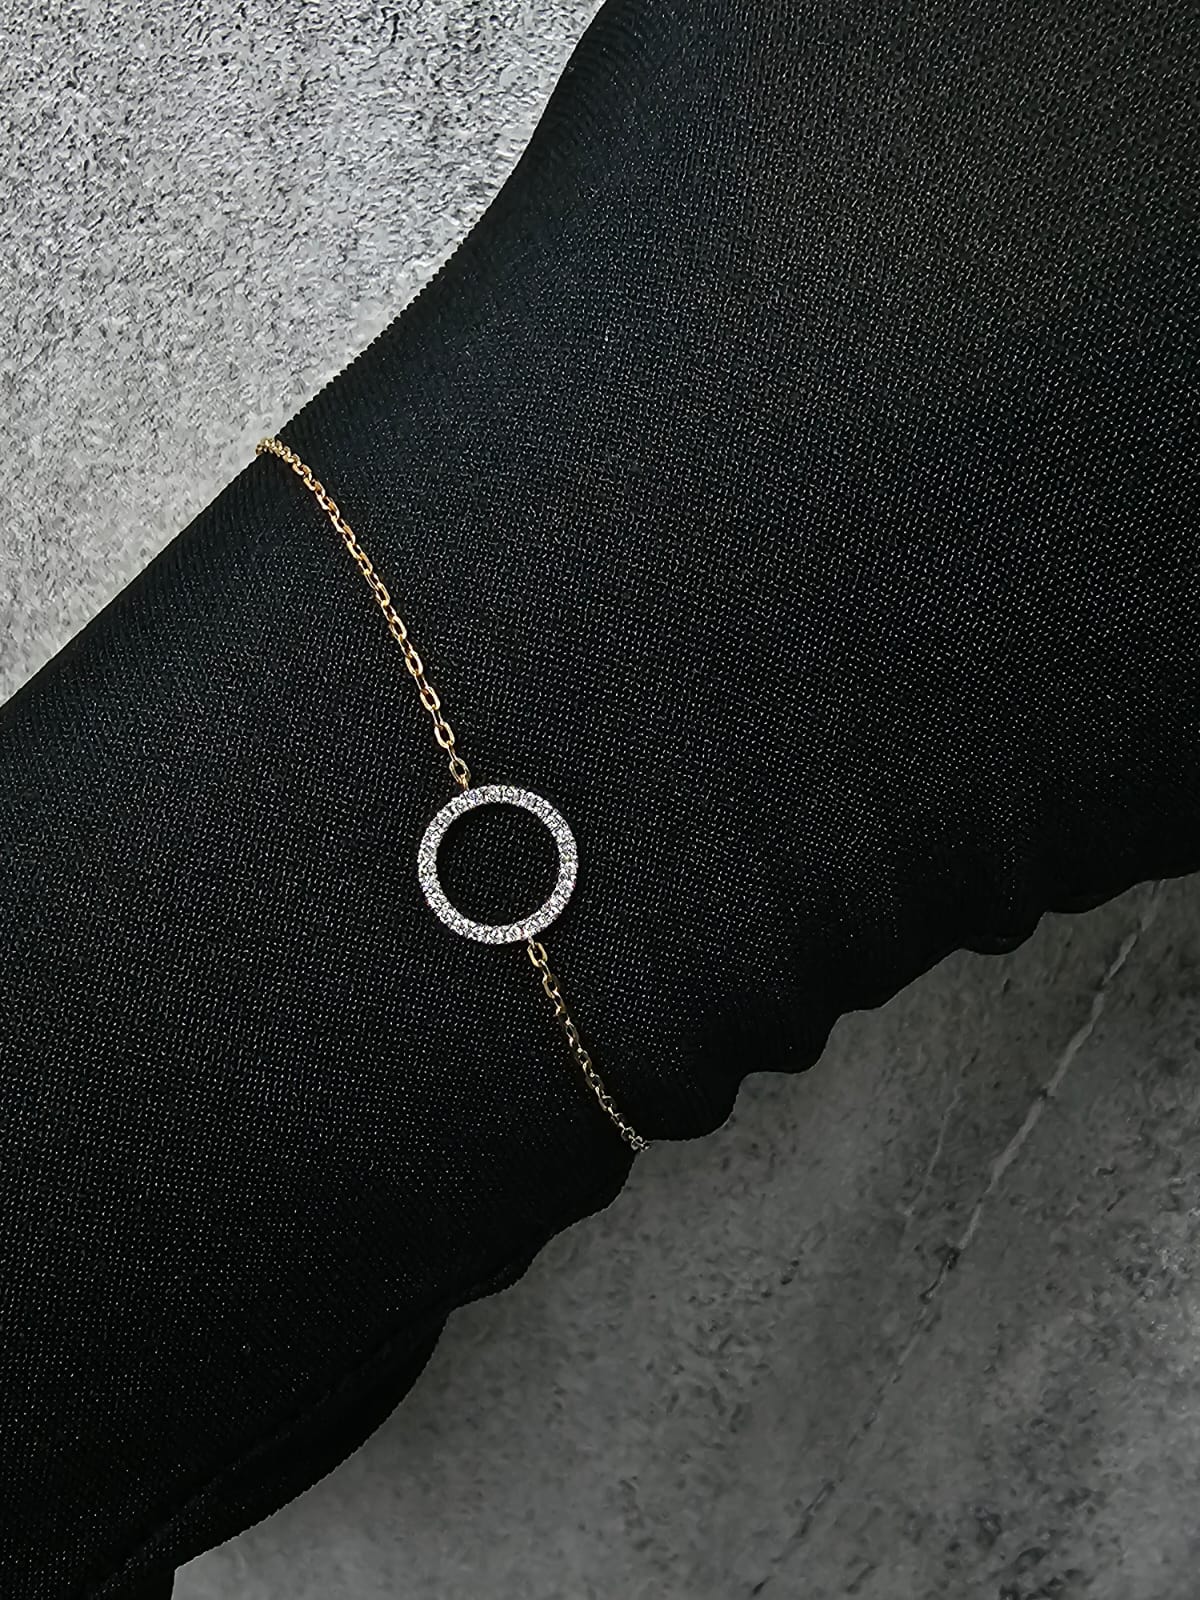 Open Circle Diamond Chain Bracelet in 18k Rose Gold.